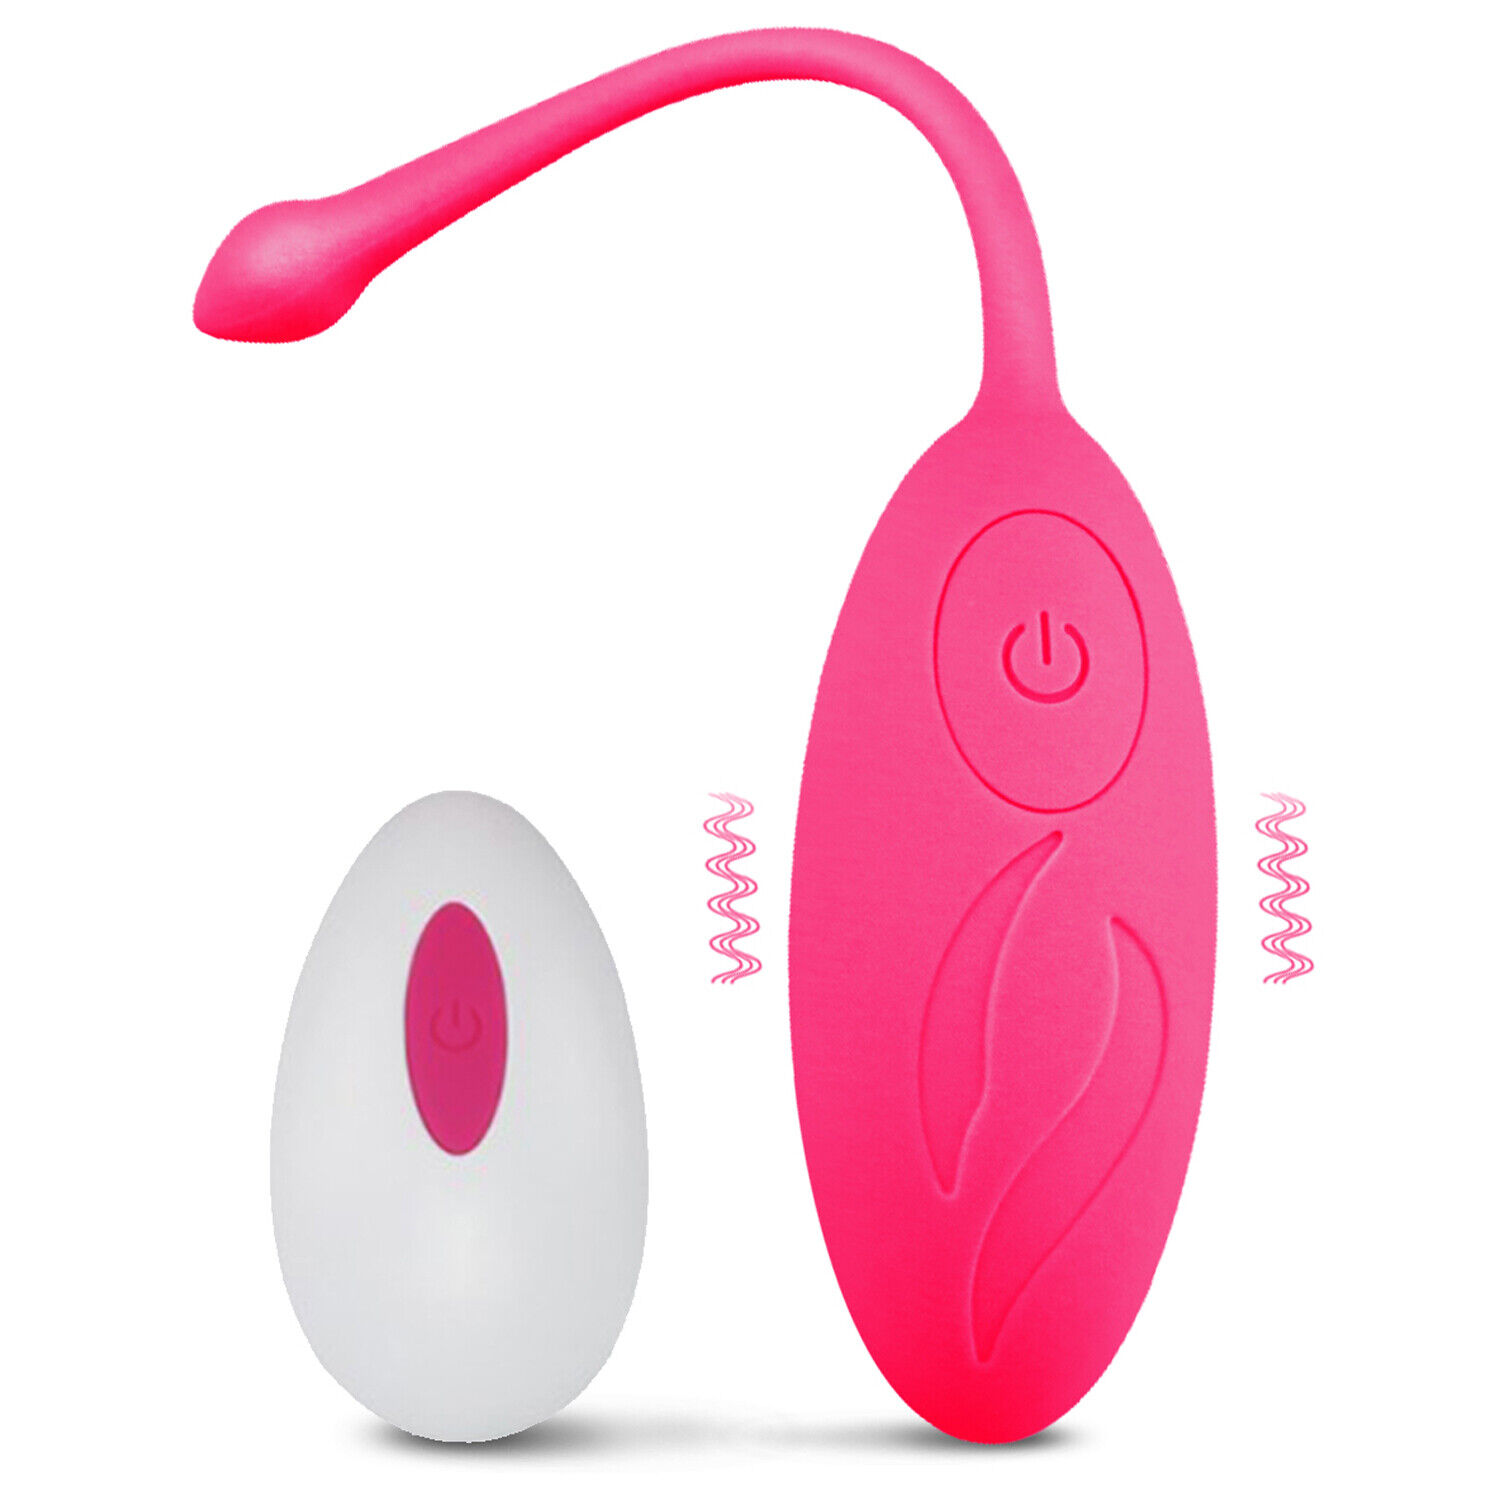 Wireless Remote Control Bullet Egg Vibrator G-Spot Dildo Adult Sex Toys Women eBay